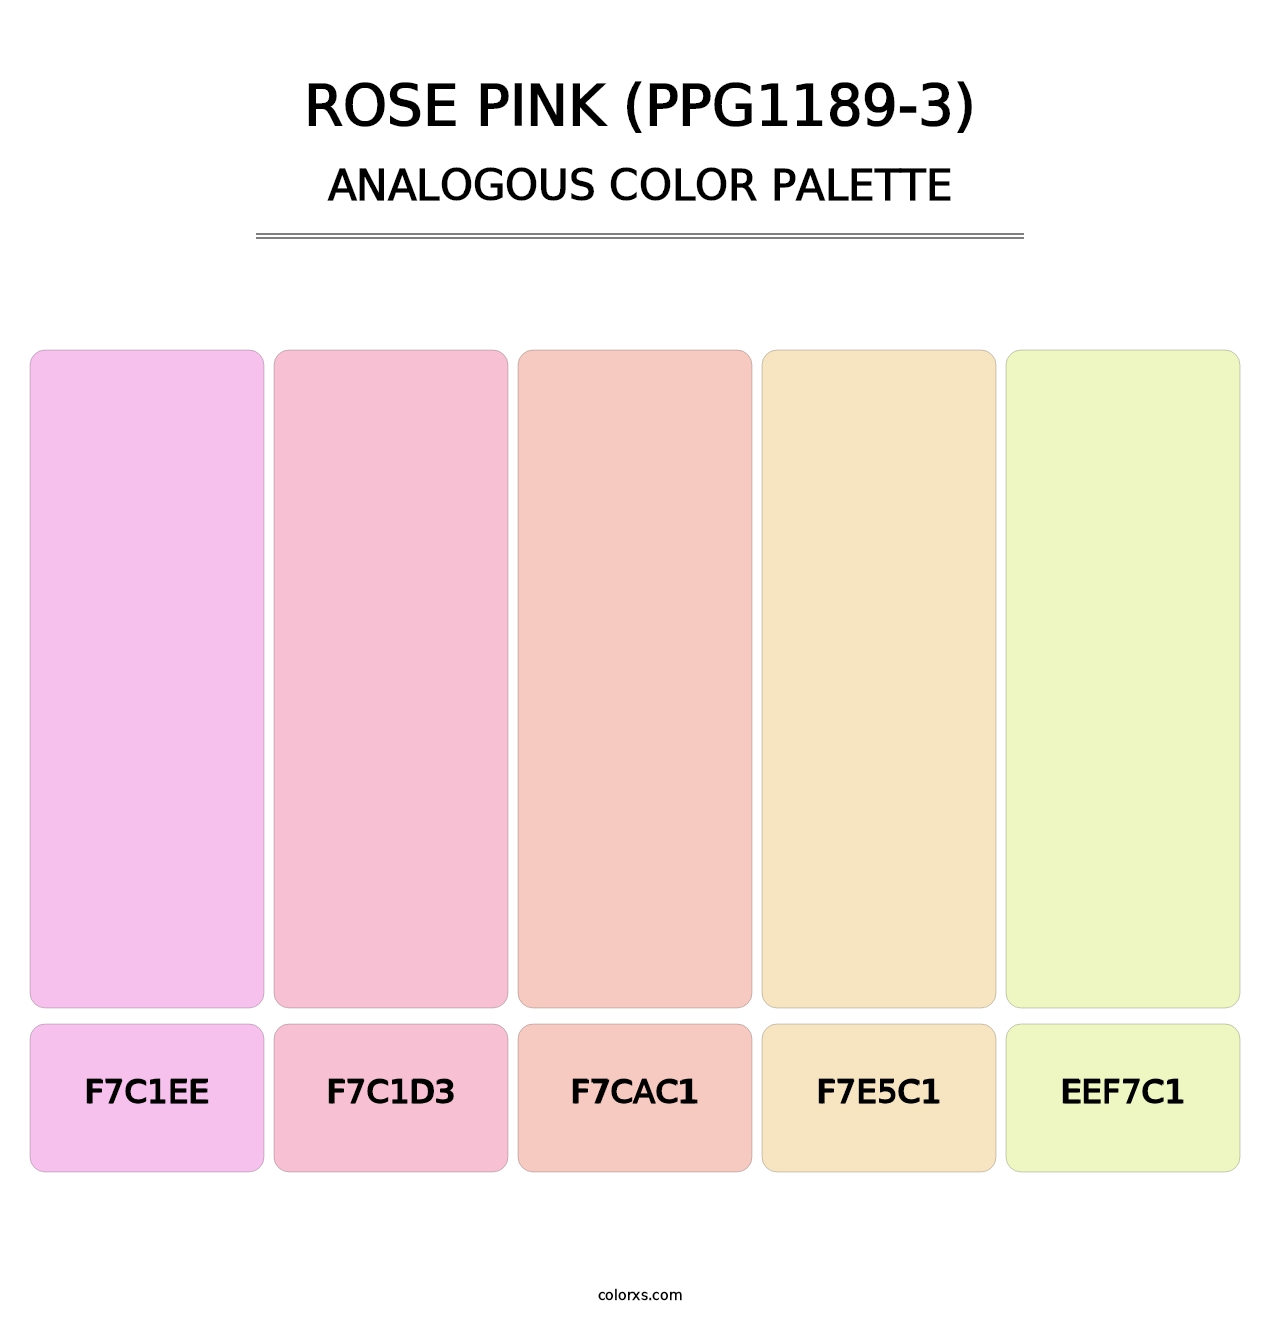 Rose Pink (PPG1189-3) - Analogous Color Palette